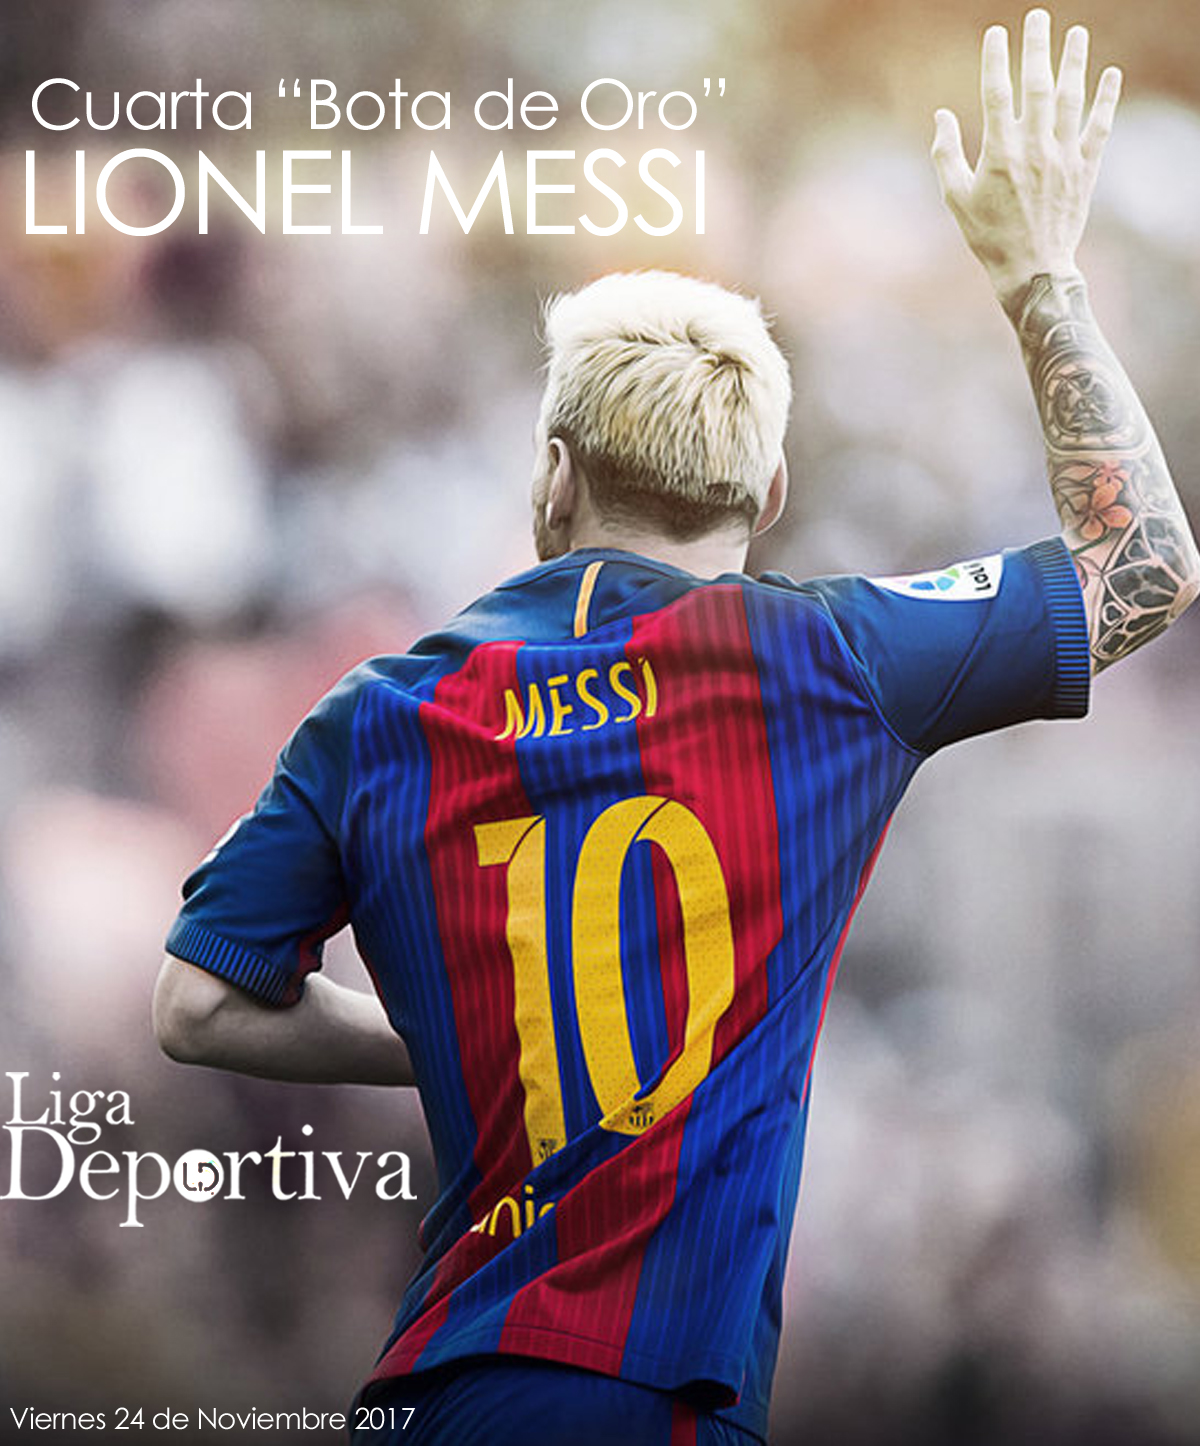 Lionel Messi gana su cuarta "Bota de Oro"